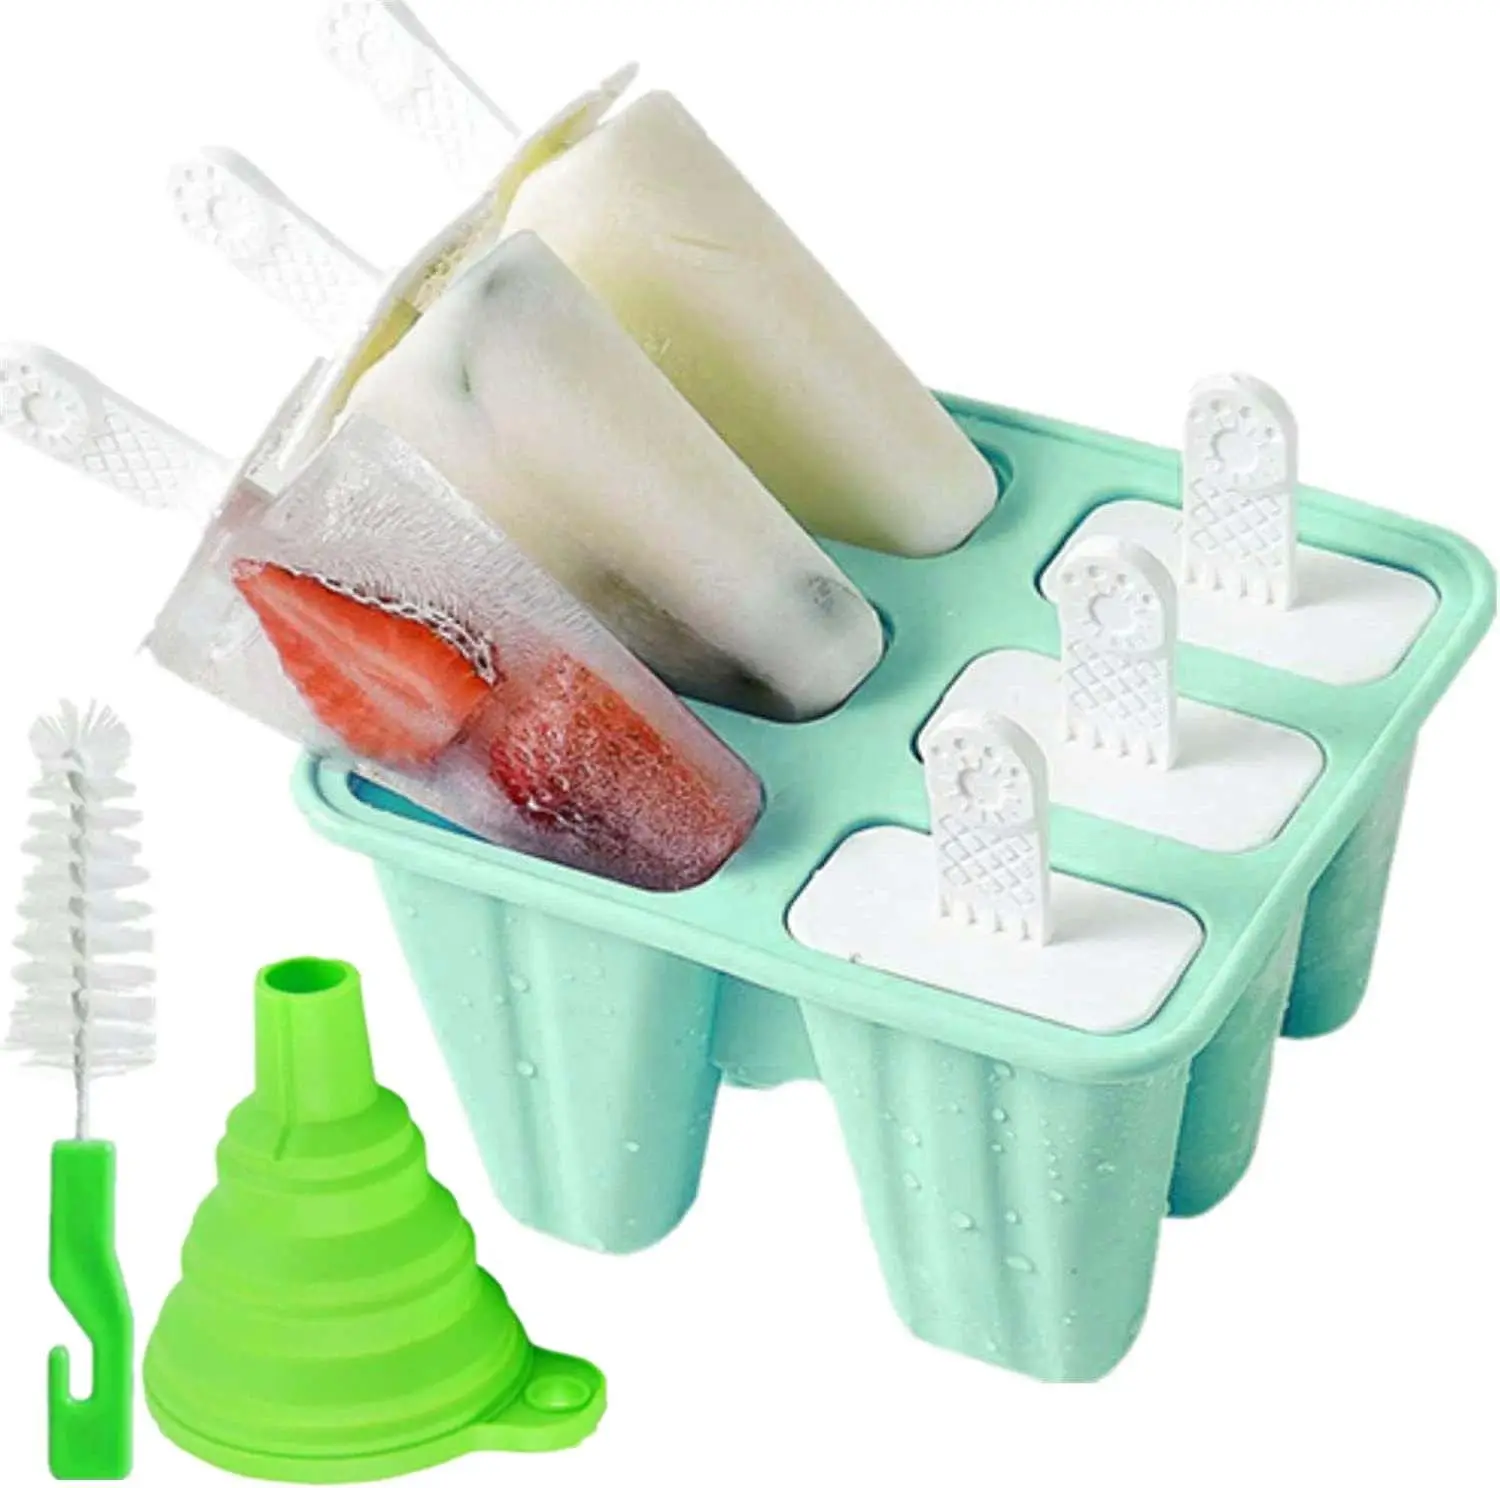 Silikon-Stielkugelformen-Tablett BPA-freie hausgemachte Popsicle-Formen Eis-Stielkugelformen für Kinder